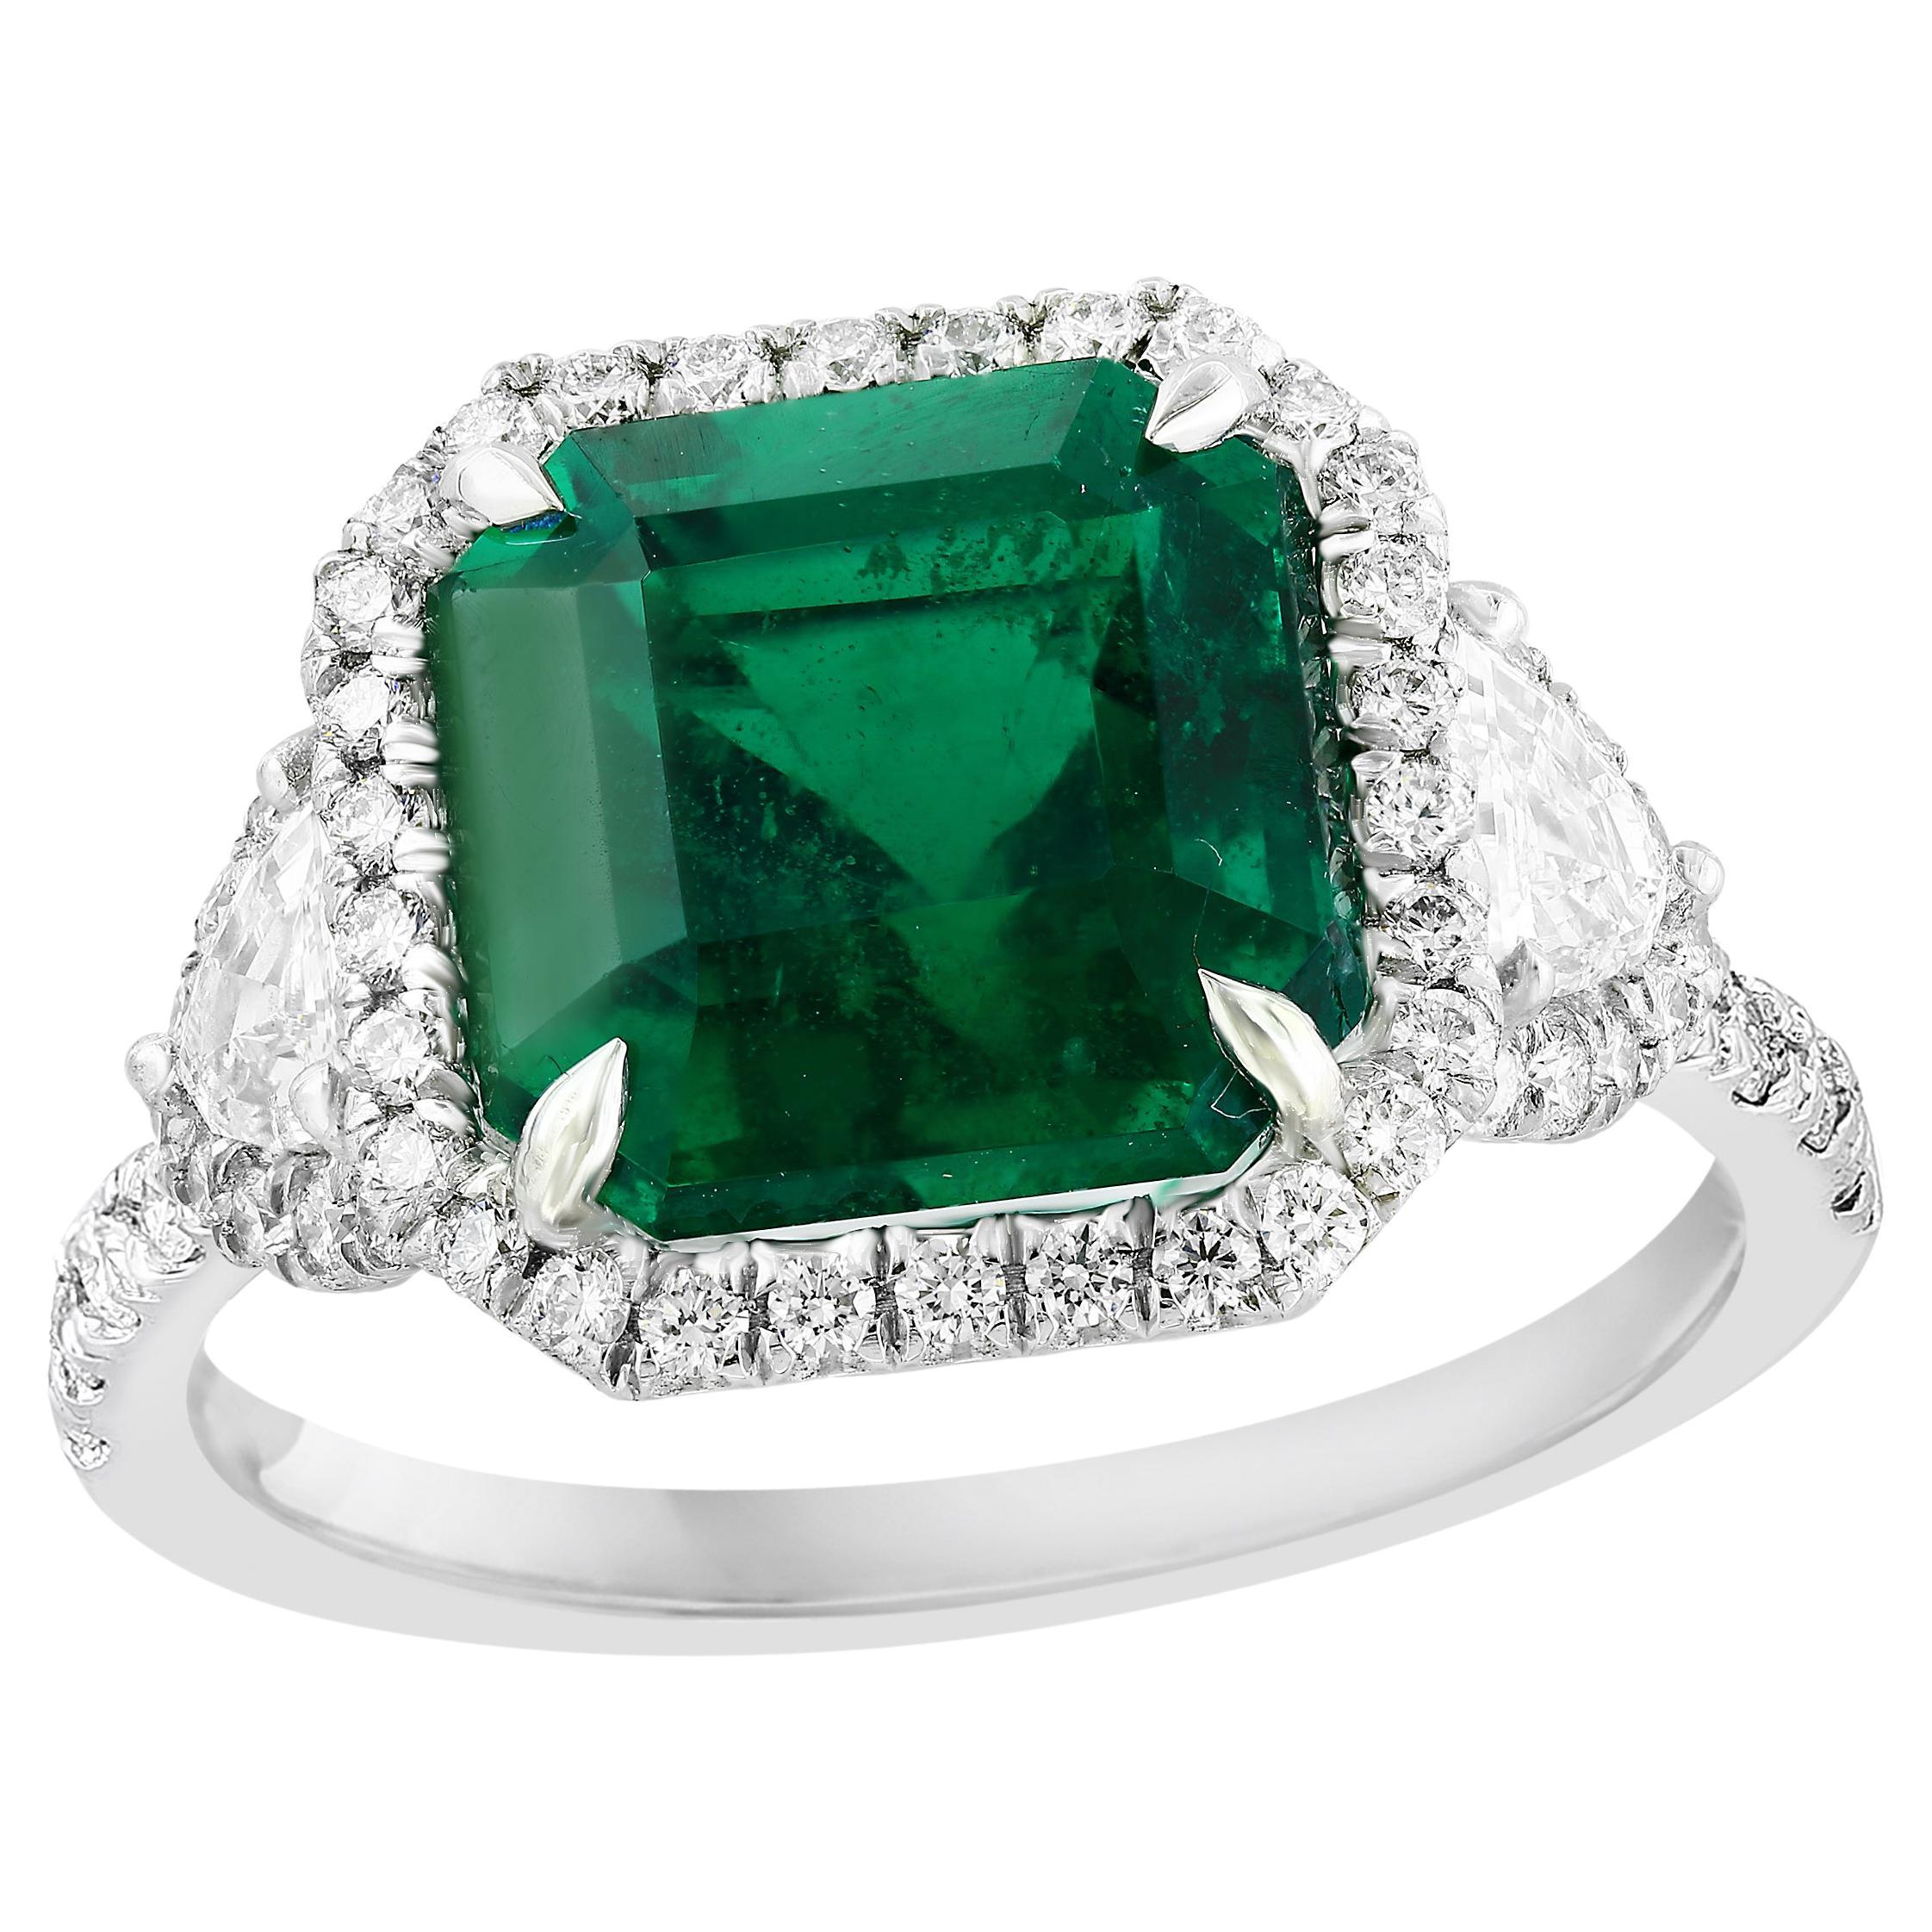 Certified 5.23 Carat Emerald Cut Emerald Diamond 3 Stone Halo Ring in Platinum For Sale